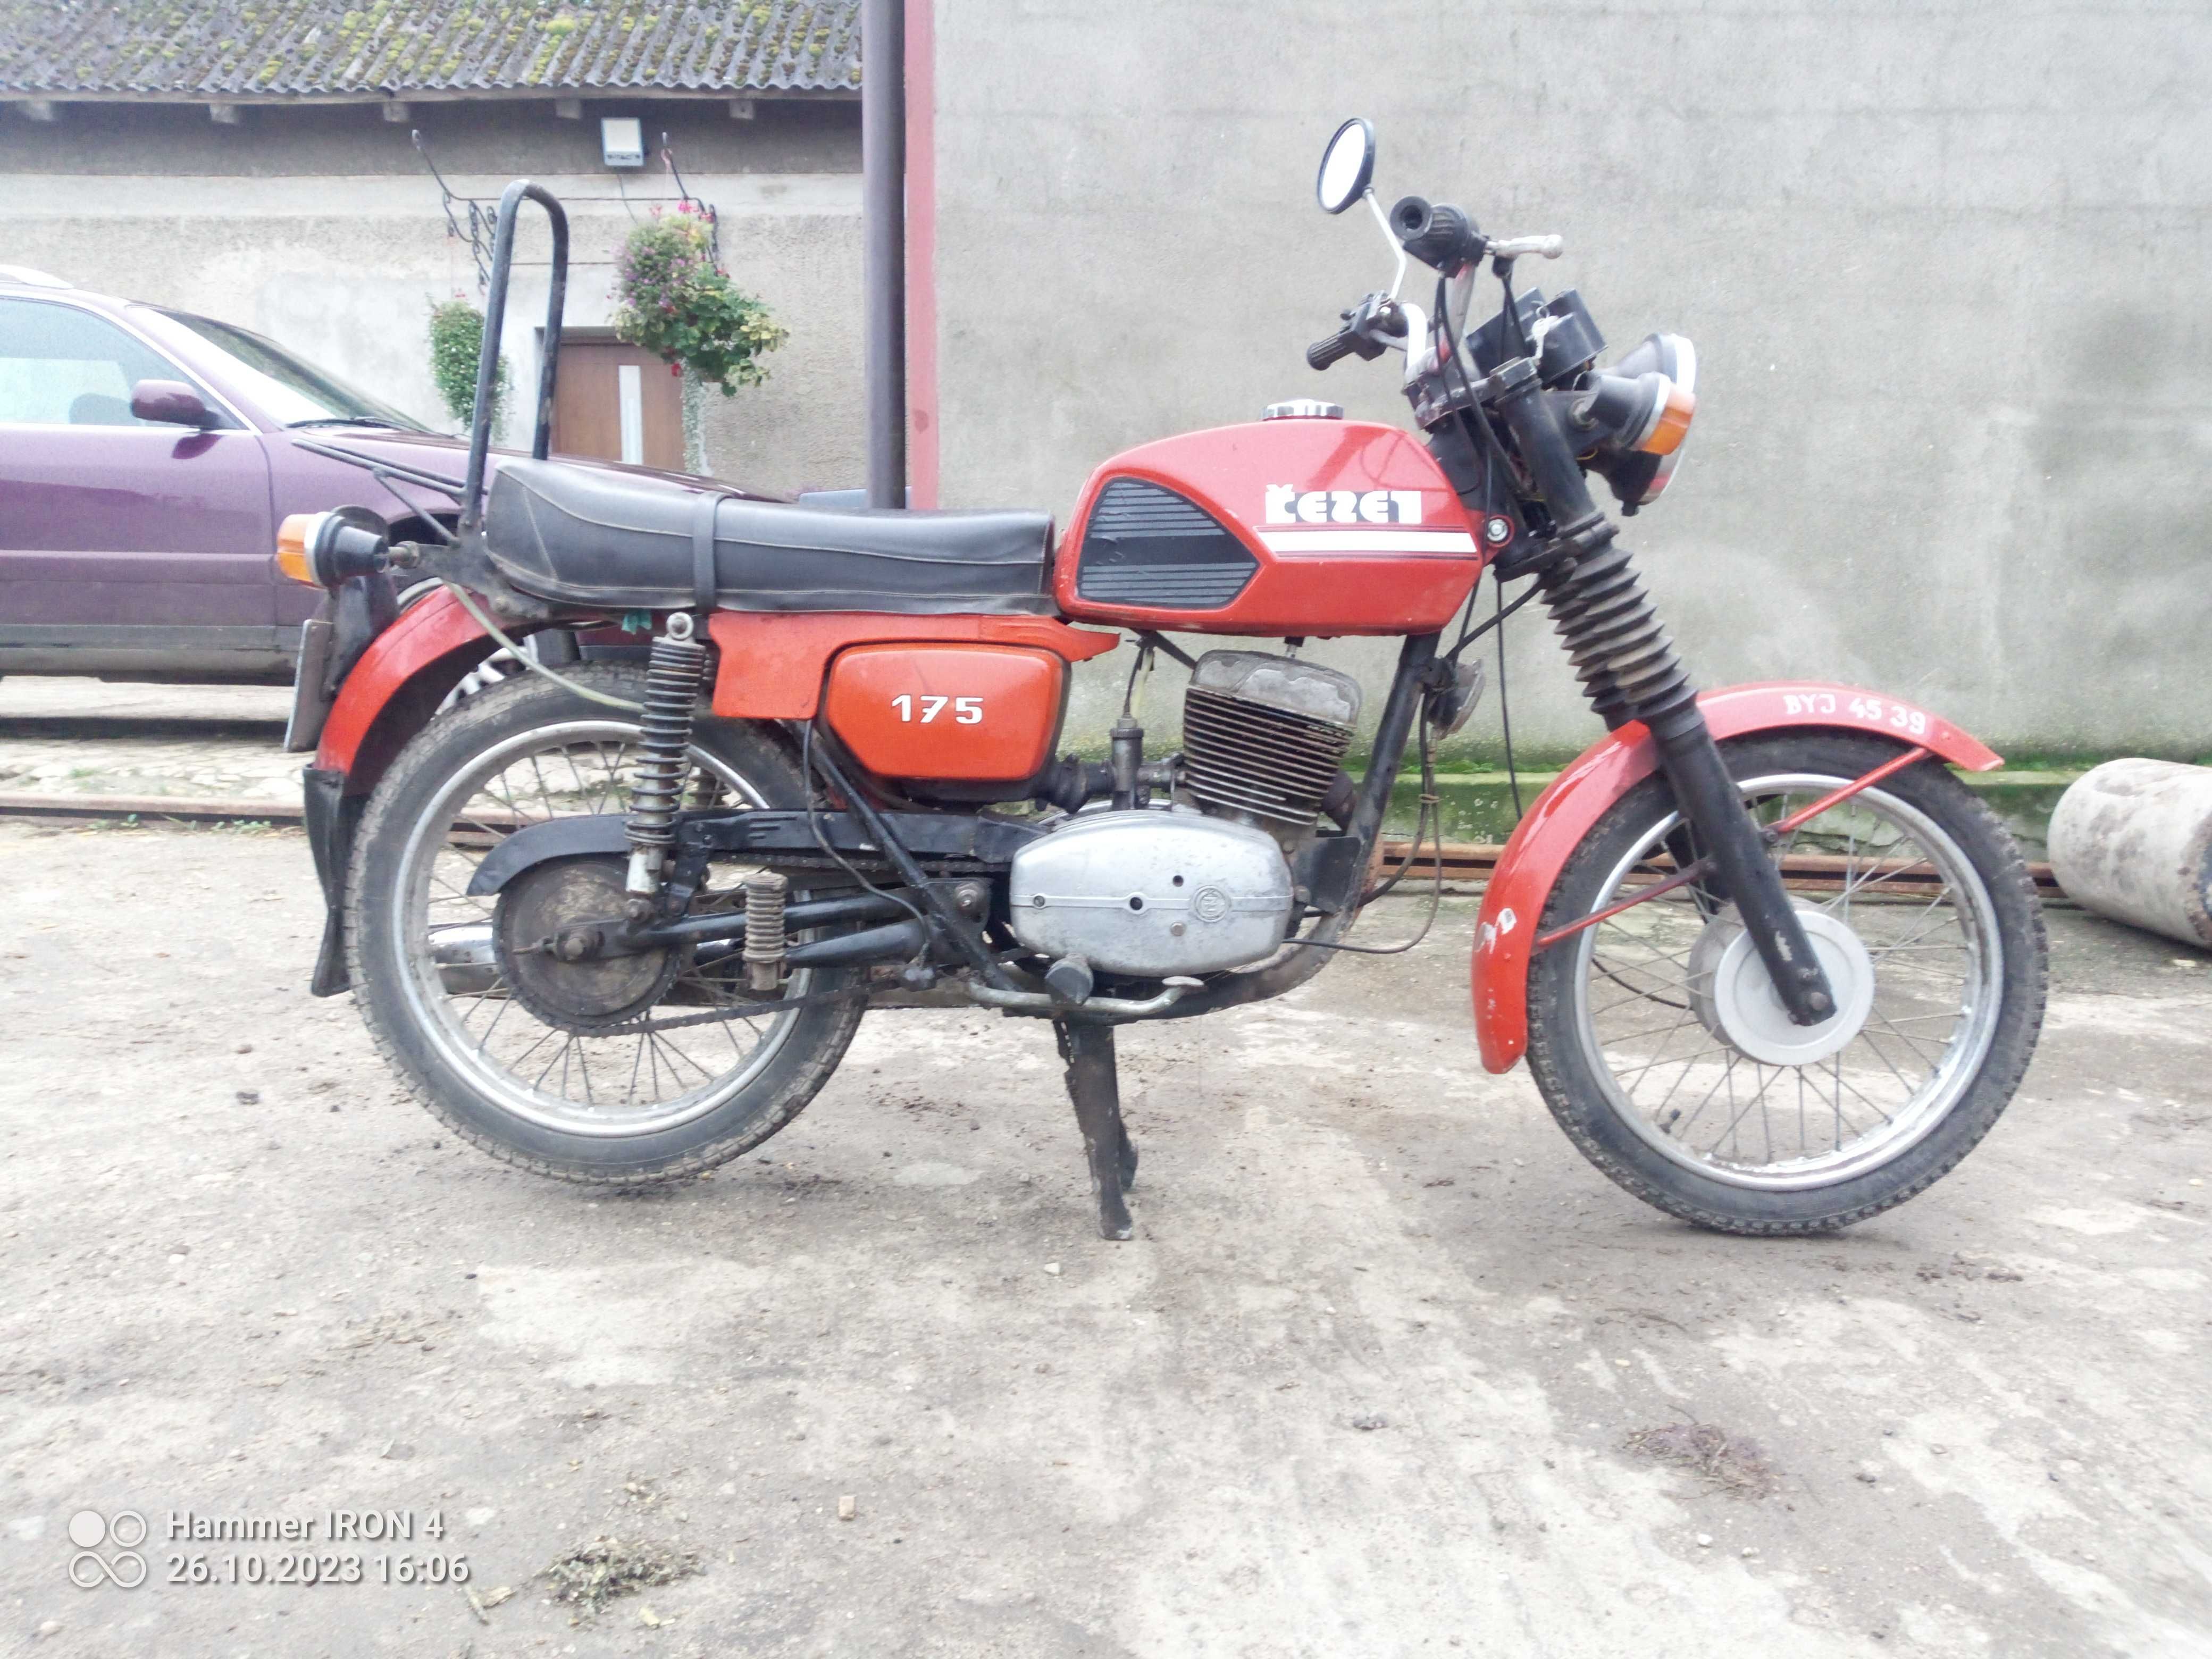 Motocykl Jawa cz 175